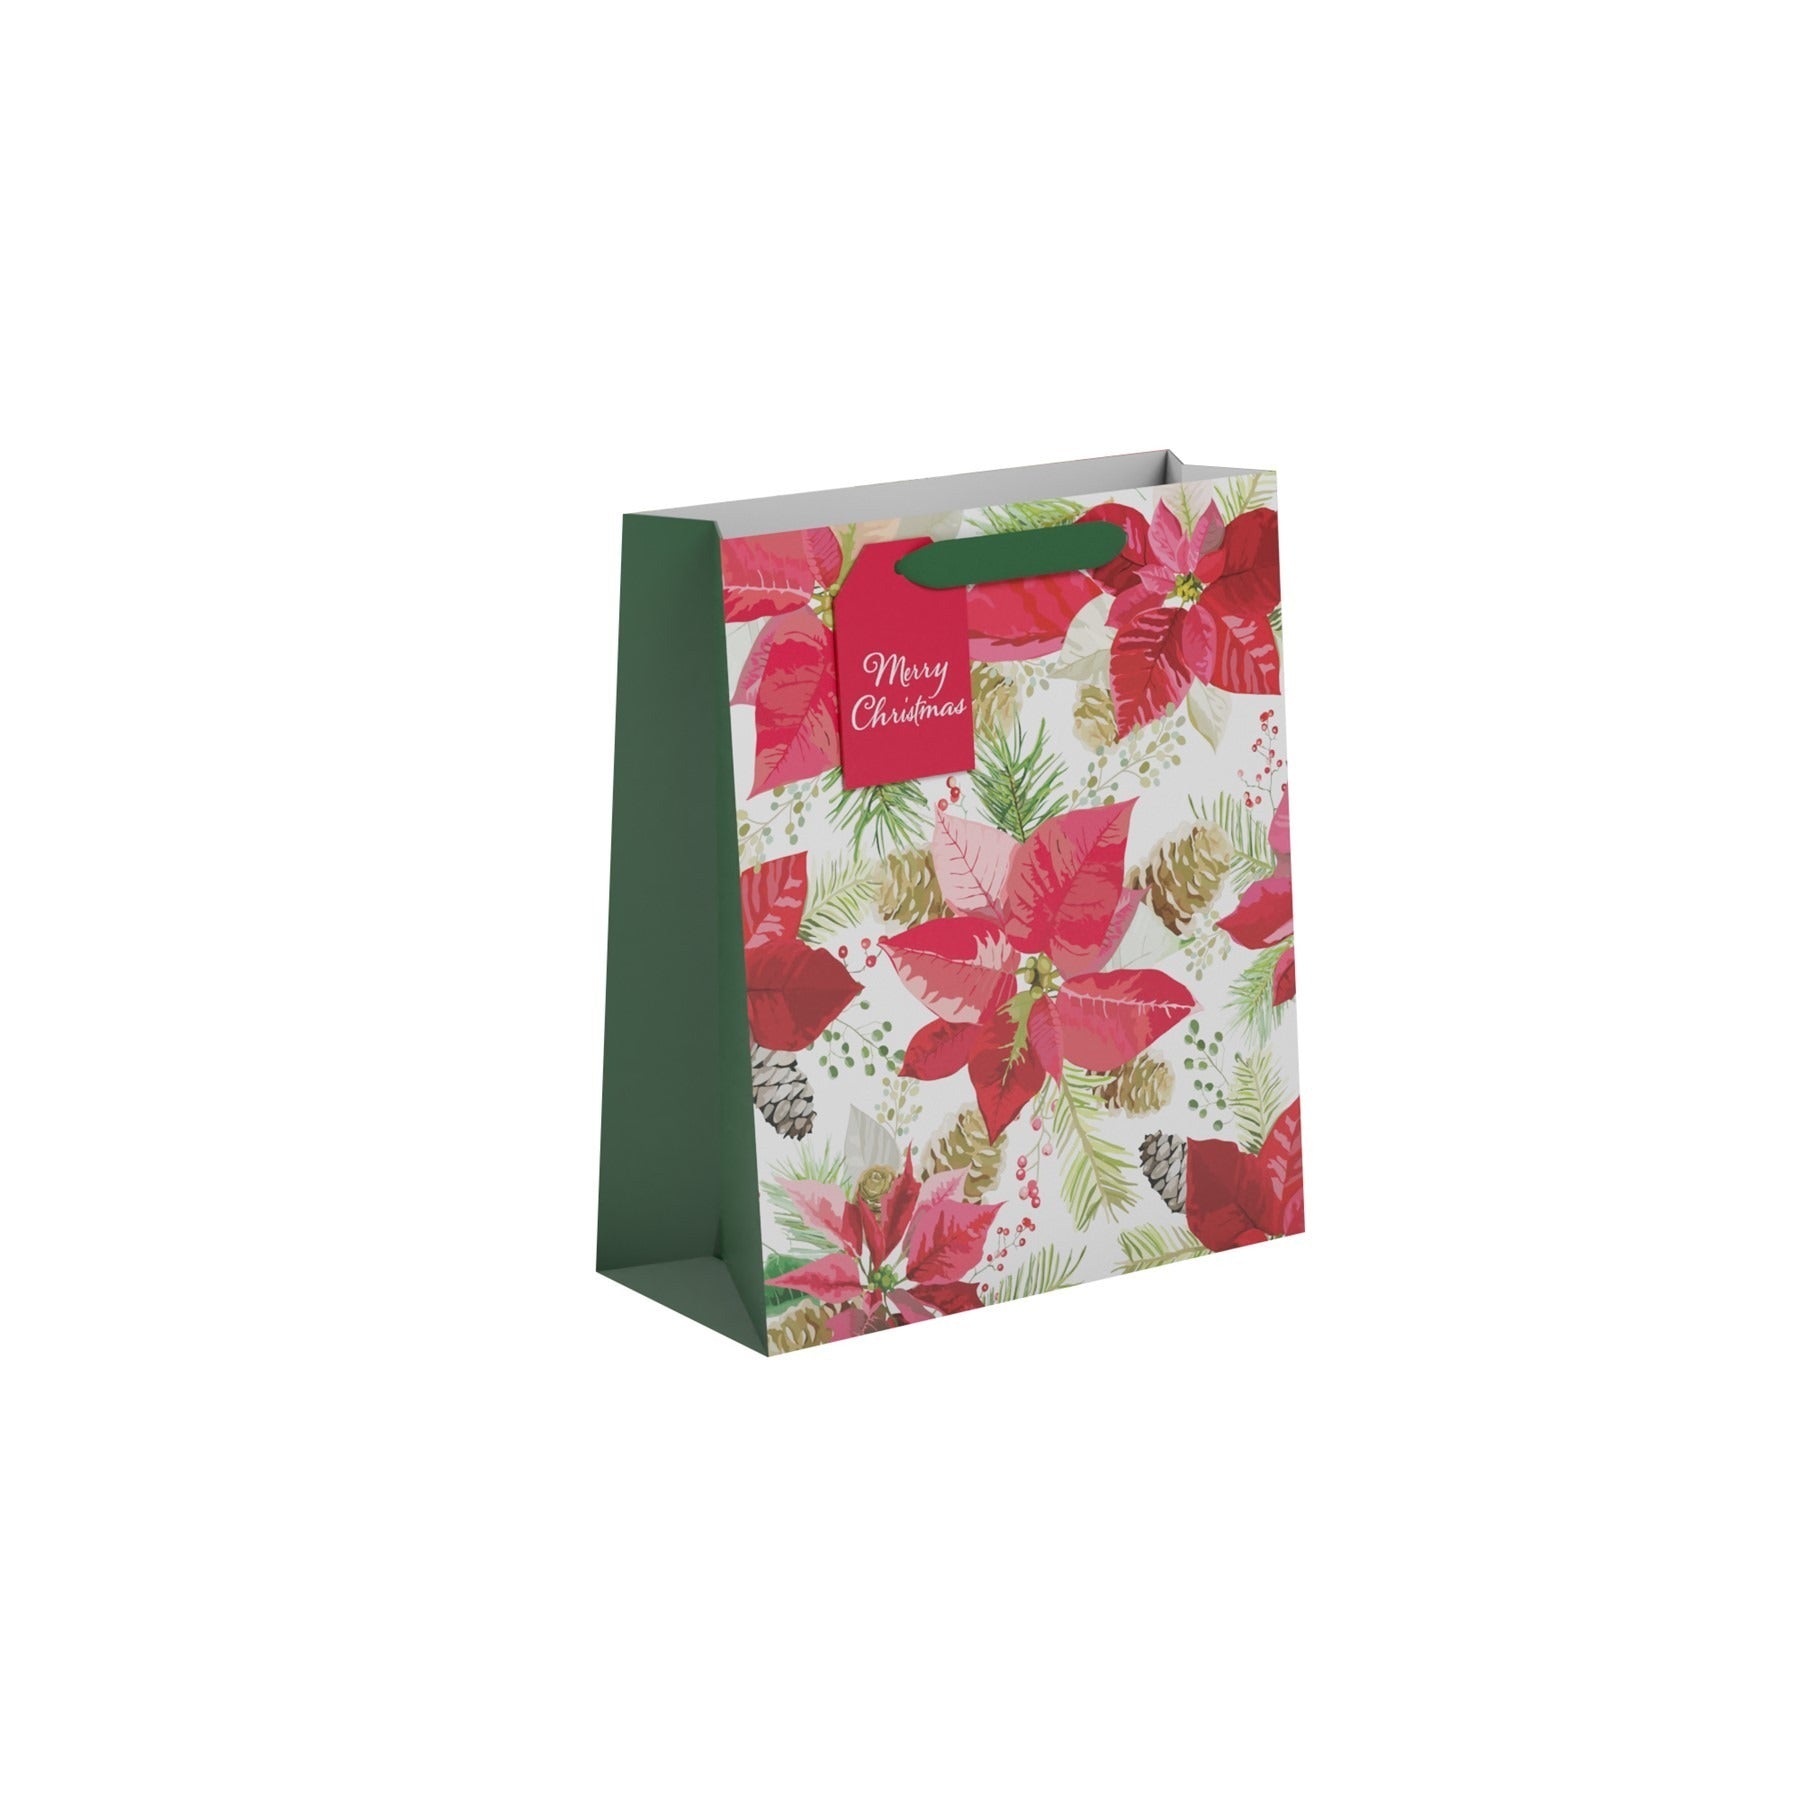 View Poinsettia Gift Bag Medium information